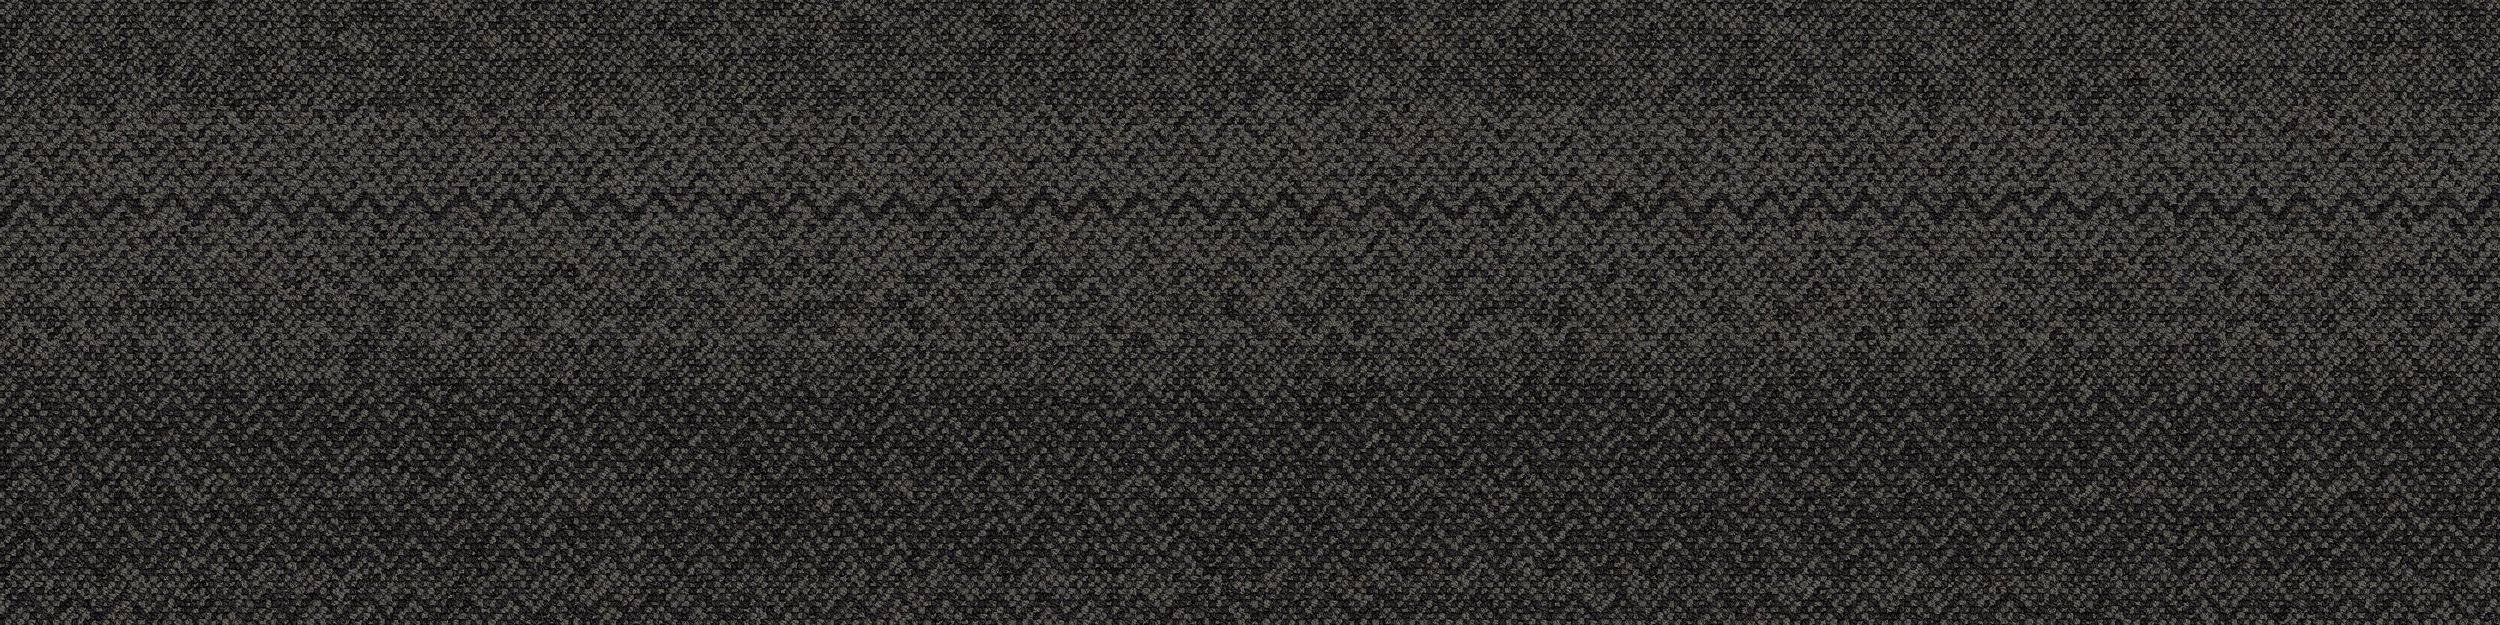 Stitchery Carpet Tile In Slate Stitchery image number 2